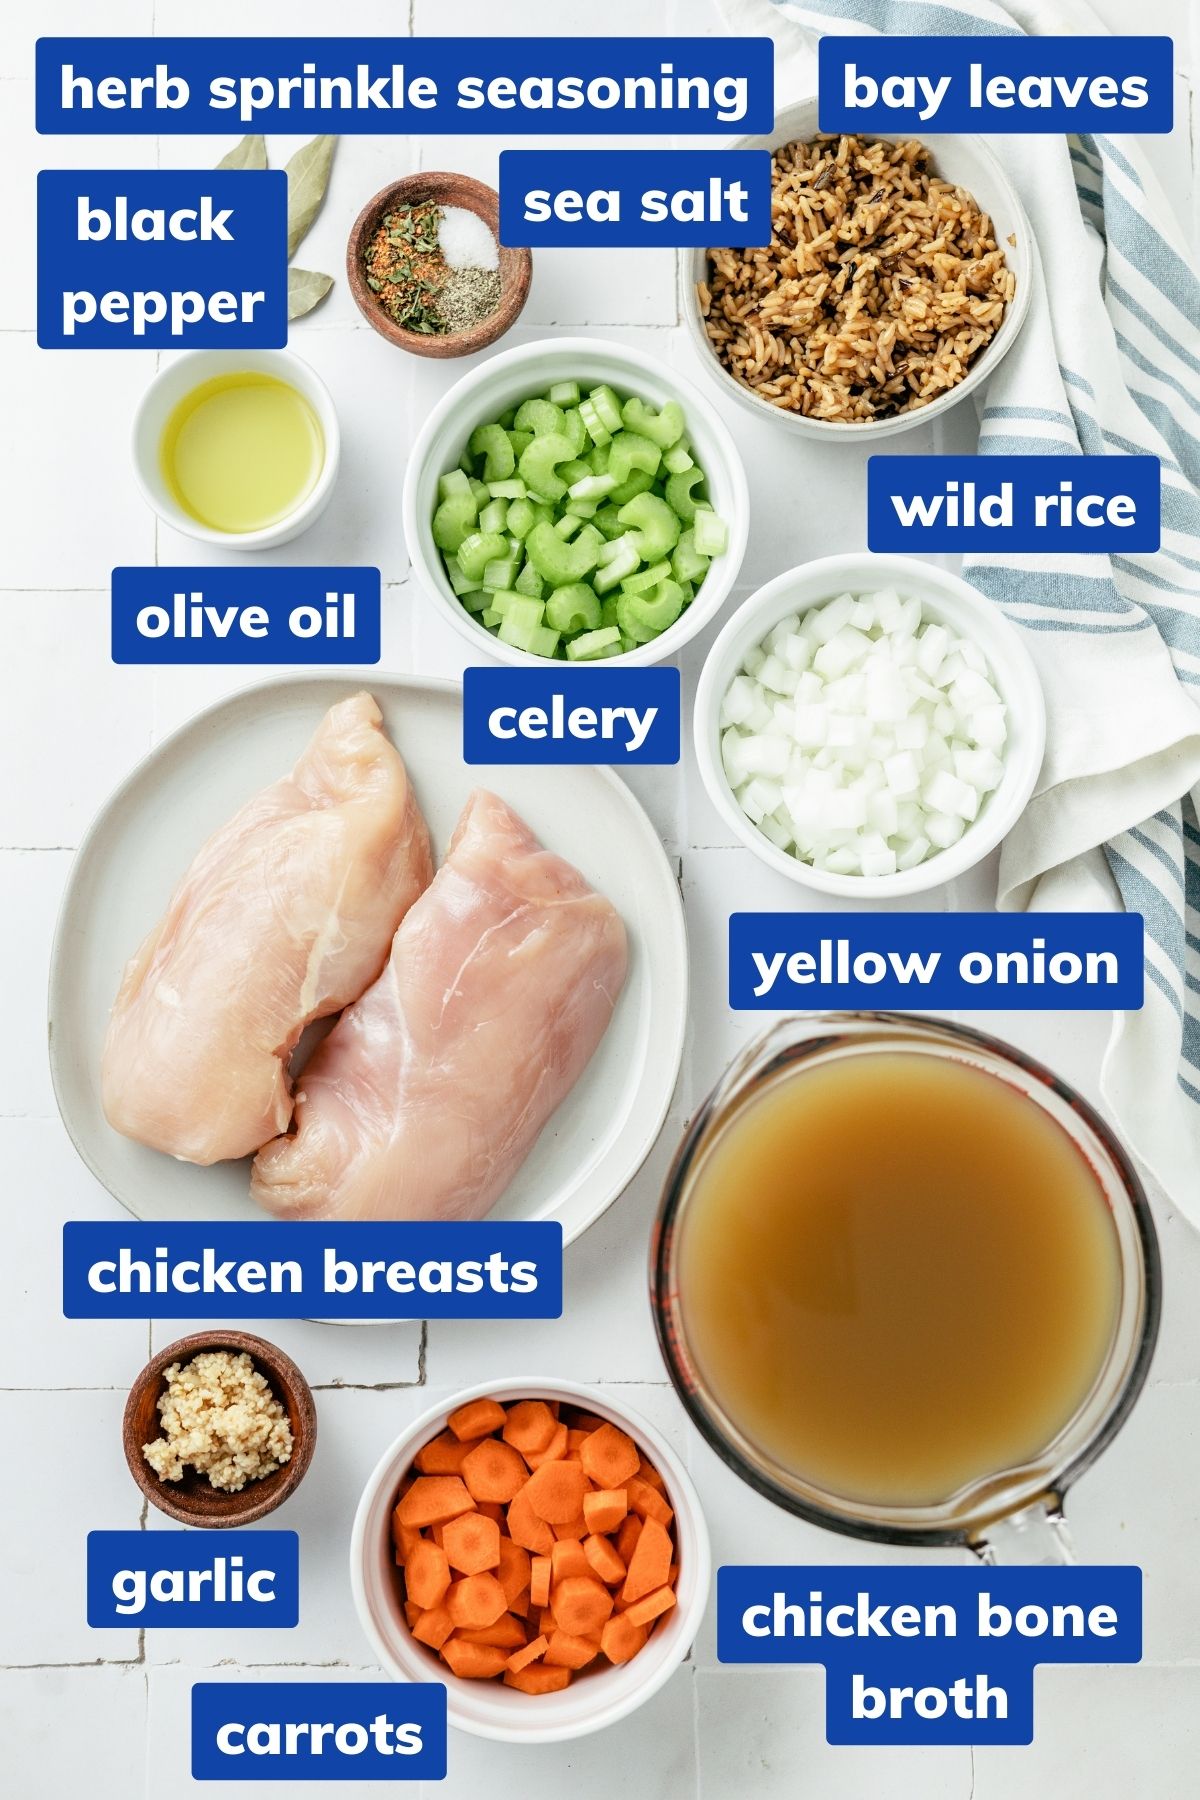 Chicken Breasts, Sea salt, 24 herb sprinkle seasoning, Black Pepper, Olive oil, Carrots, Celery, Yellow onion, Garlic, Chicken bone broth, Bay leaves